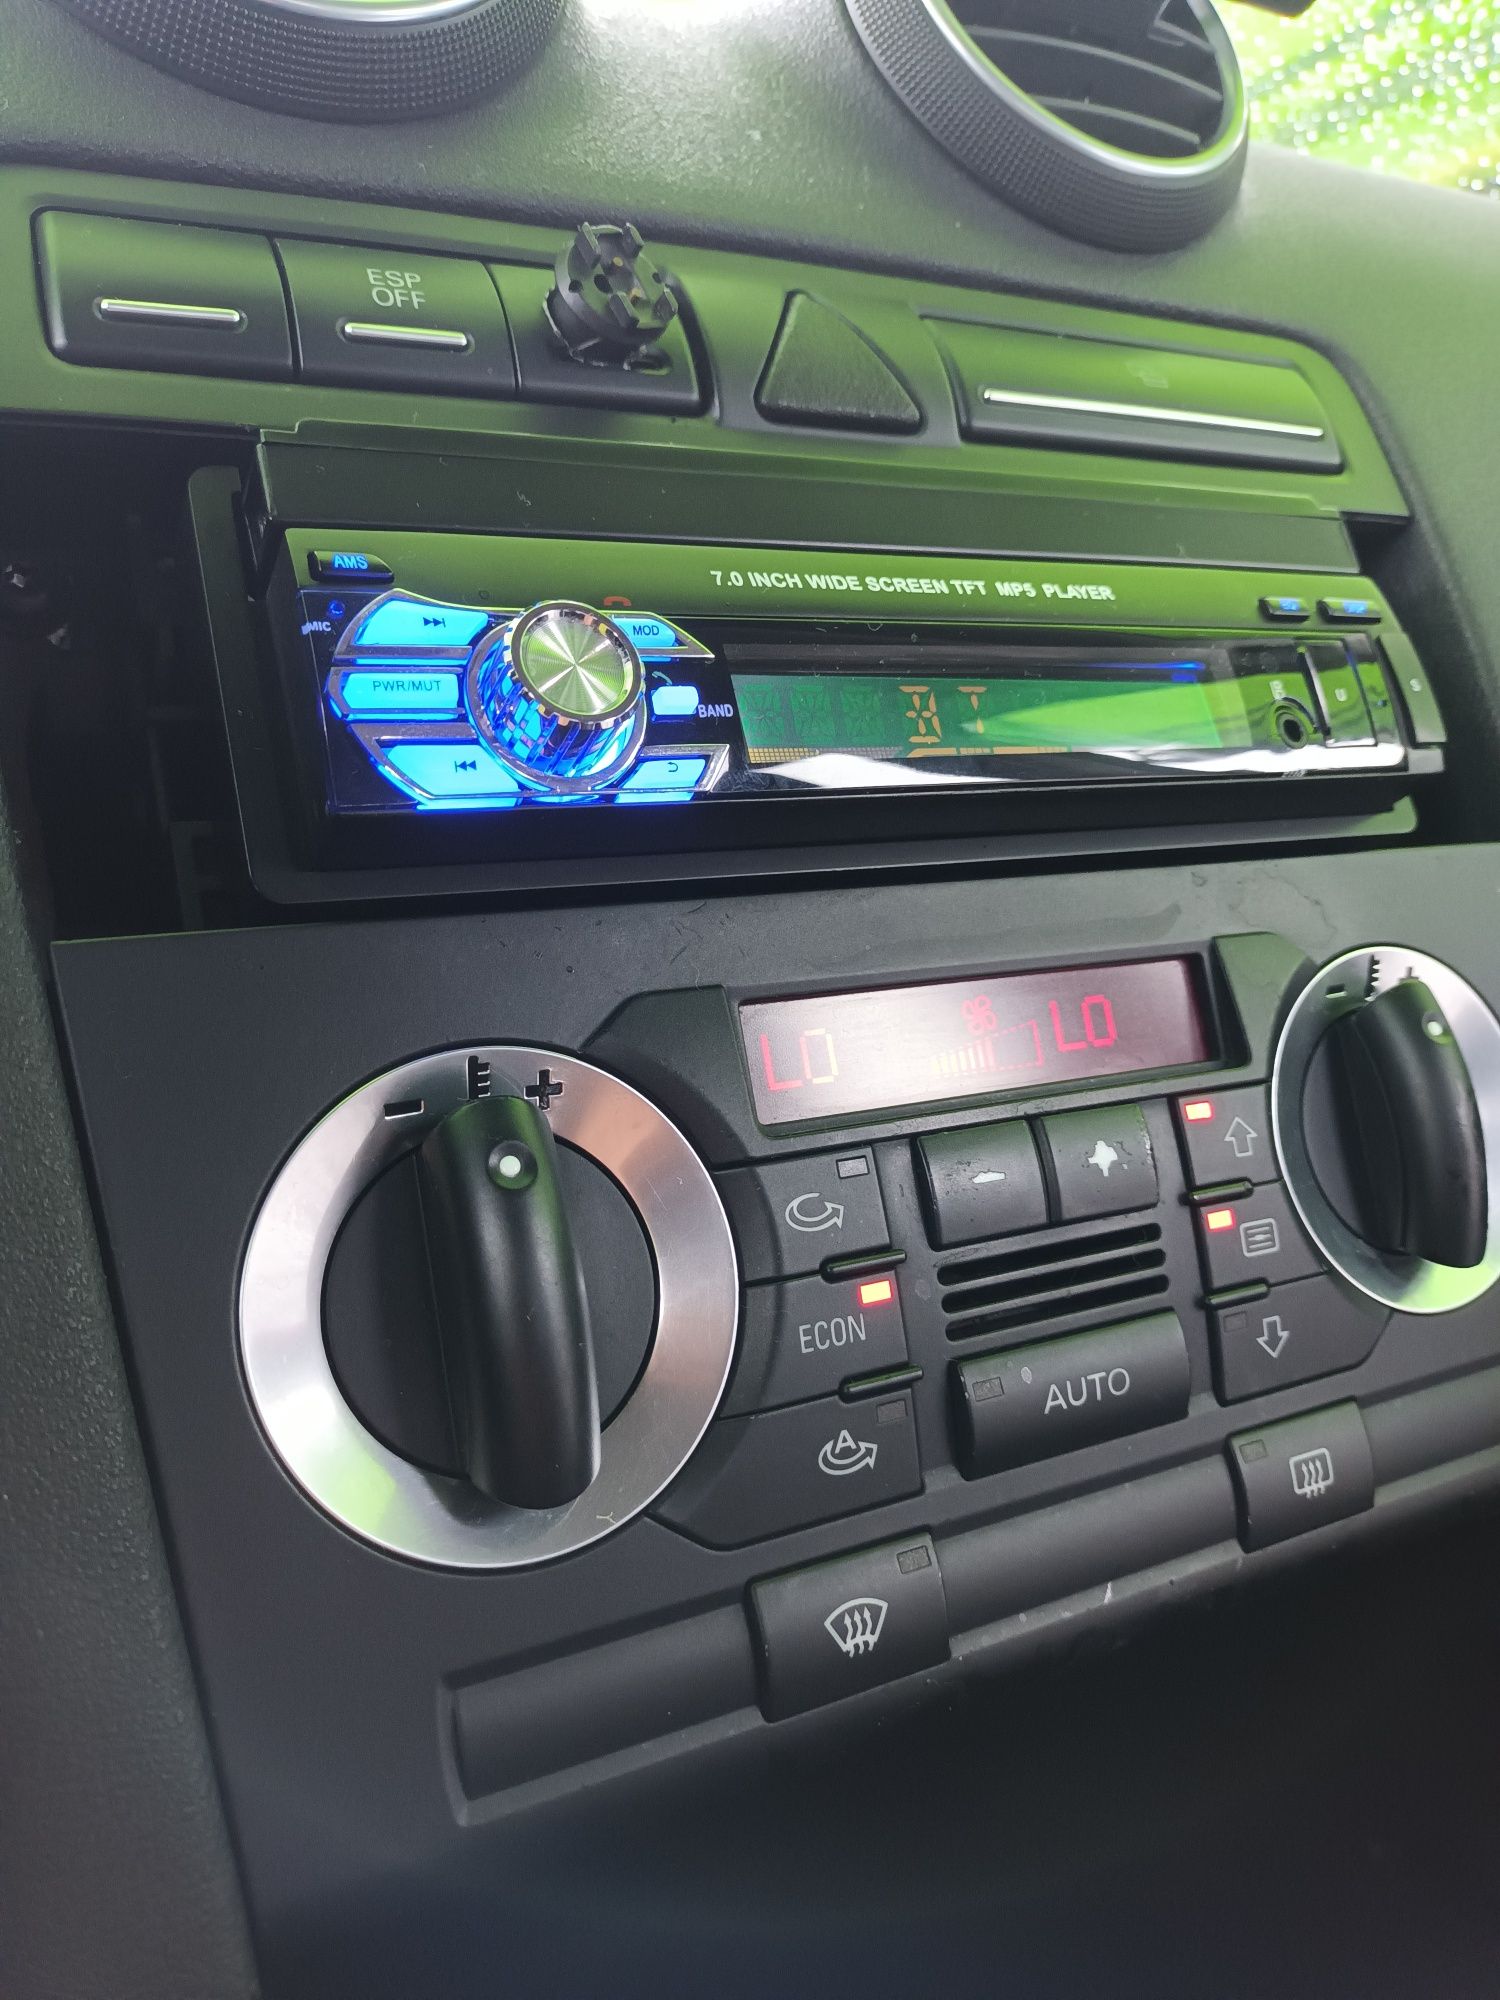 Consola AUDI 1 din com radio bluetooth